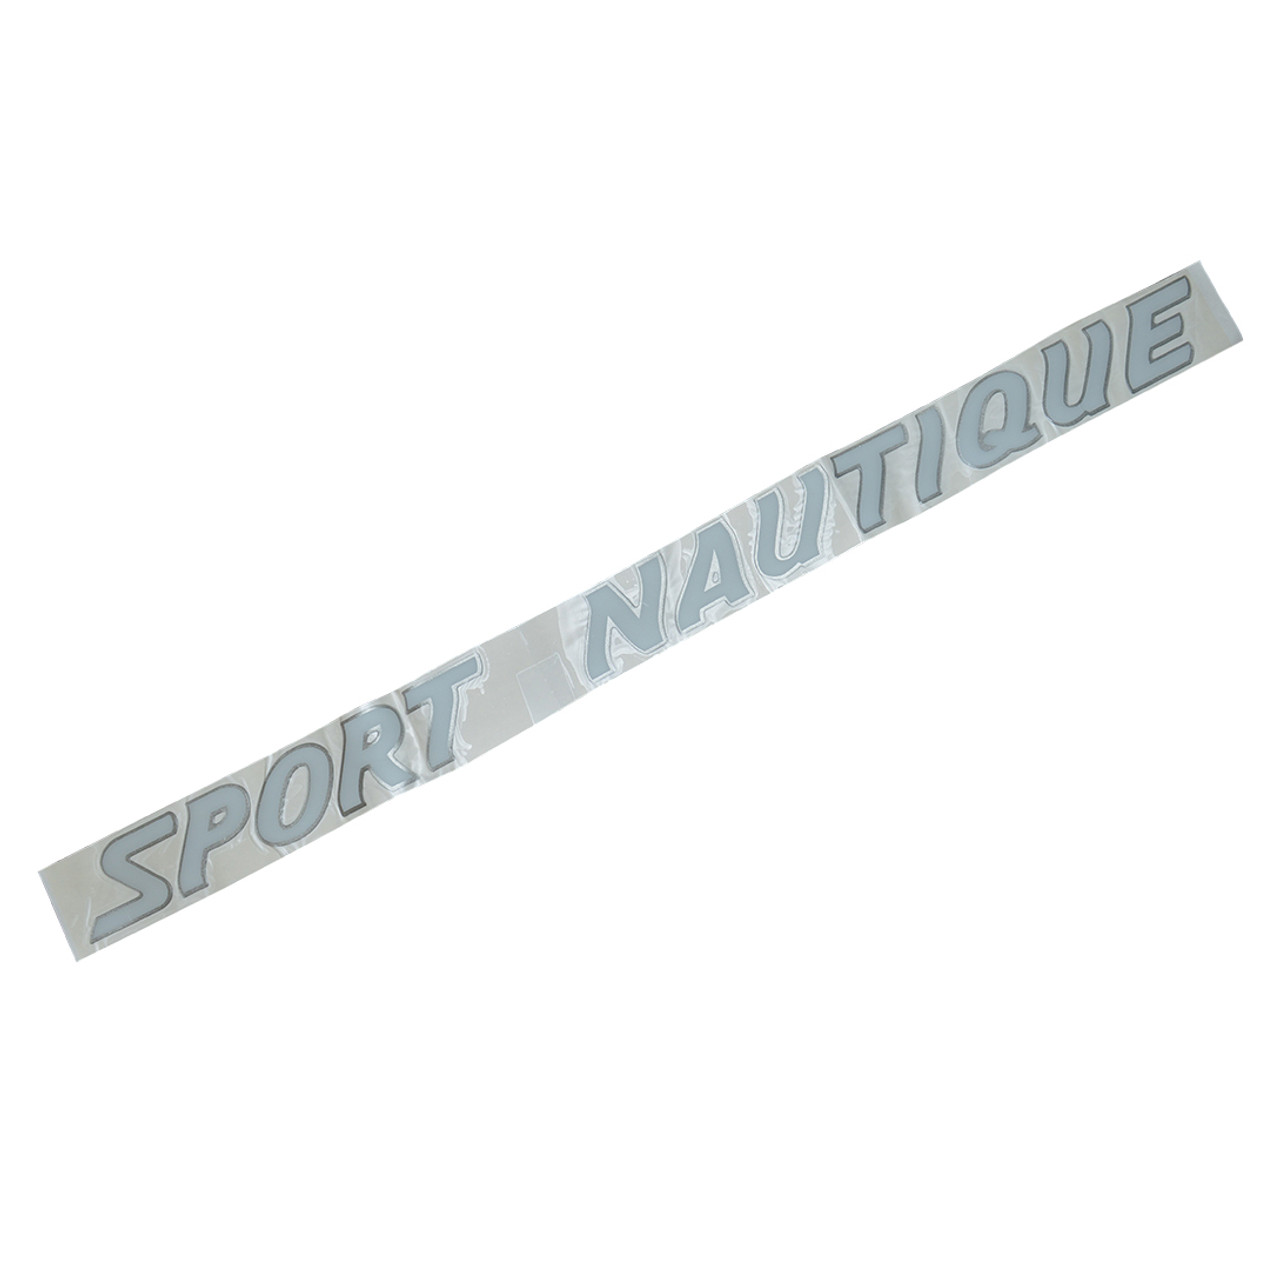 Sport Nautique hull decal 2000-2002